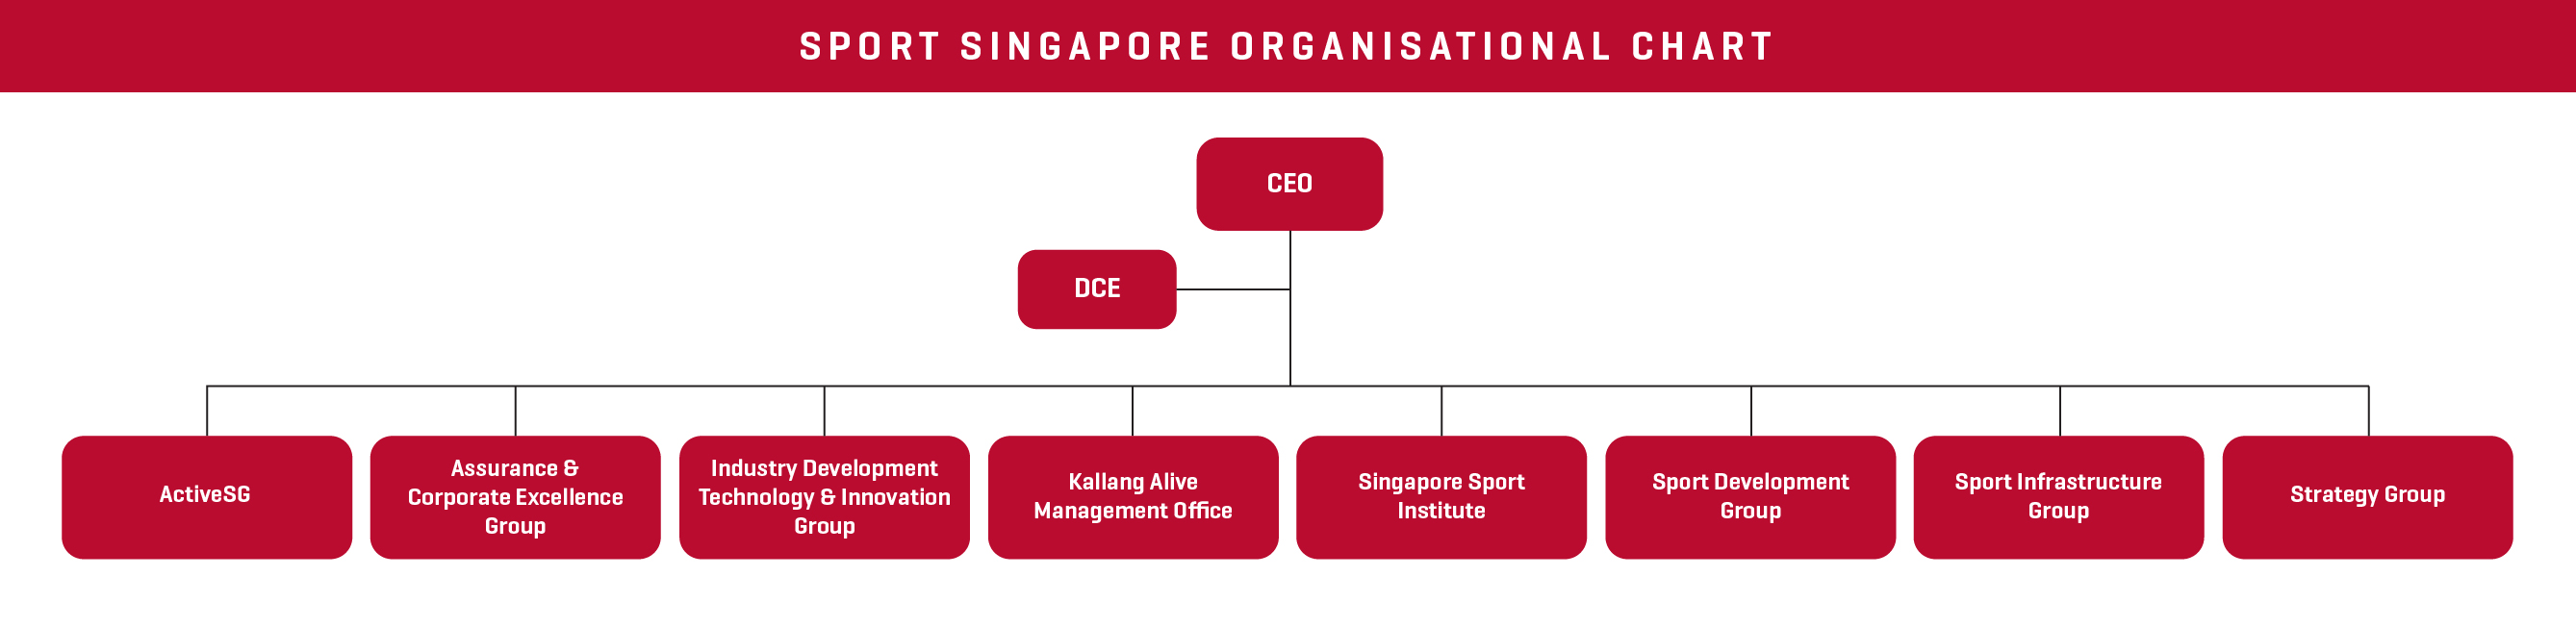 Sport Singapore Organisational Chart